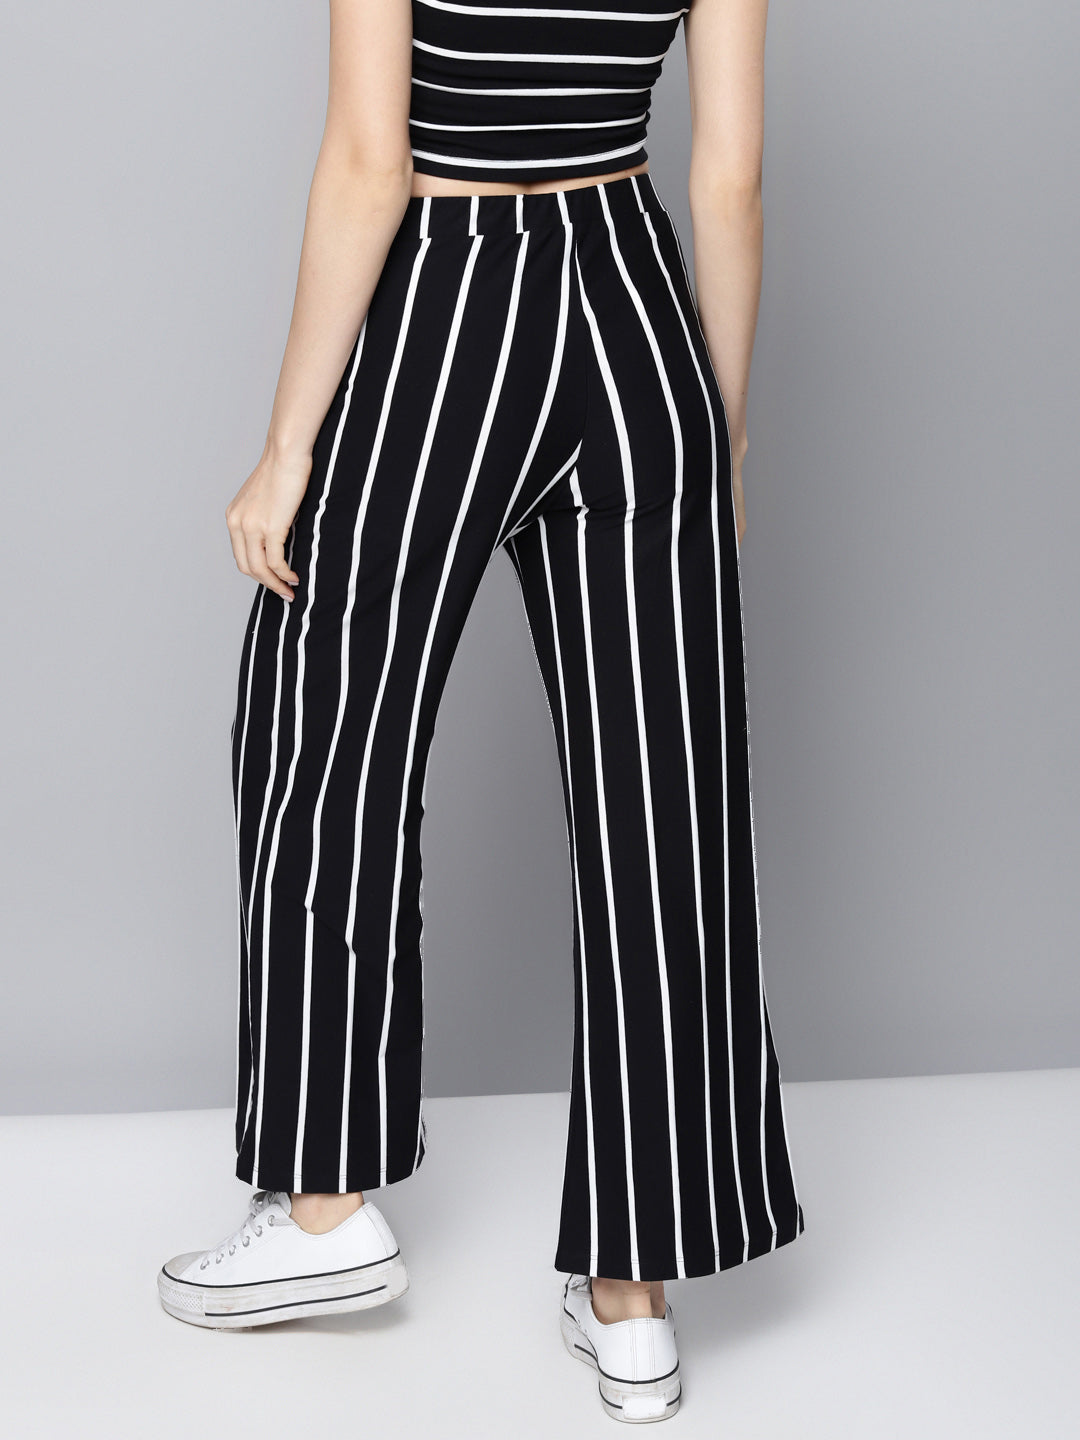 Buy AMYDUS Women's Plus Size Black White Striped Pants at Amazon.in